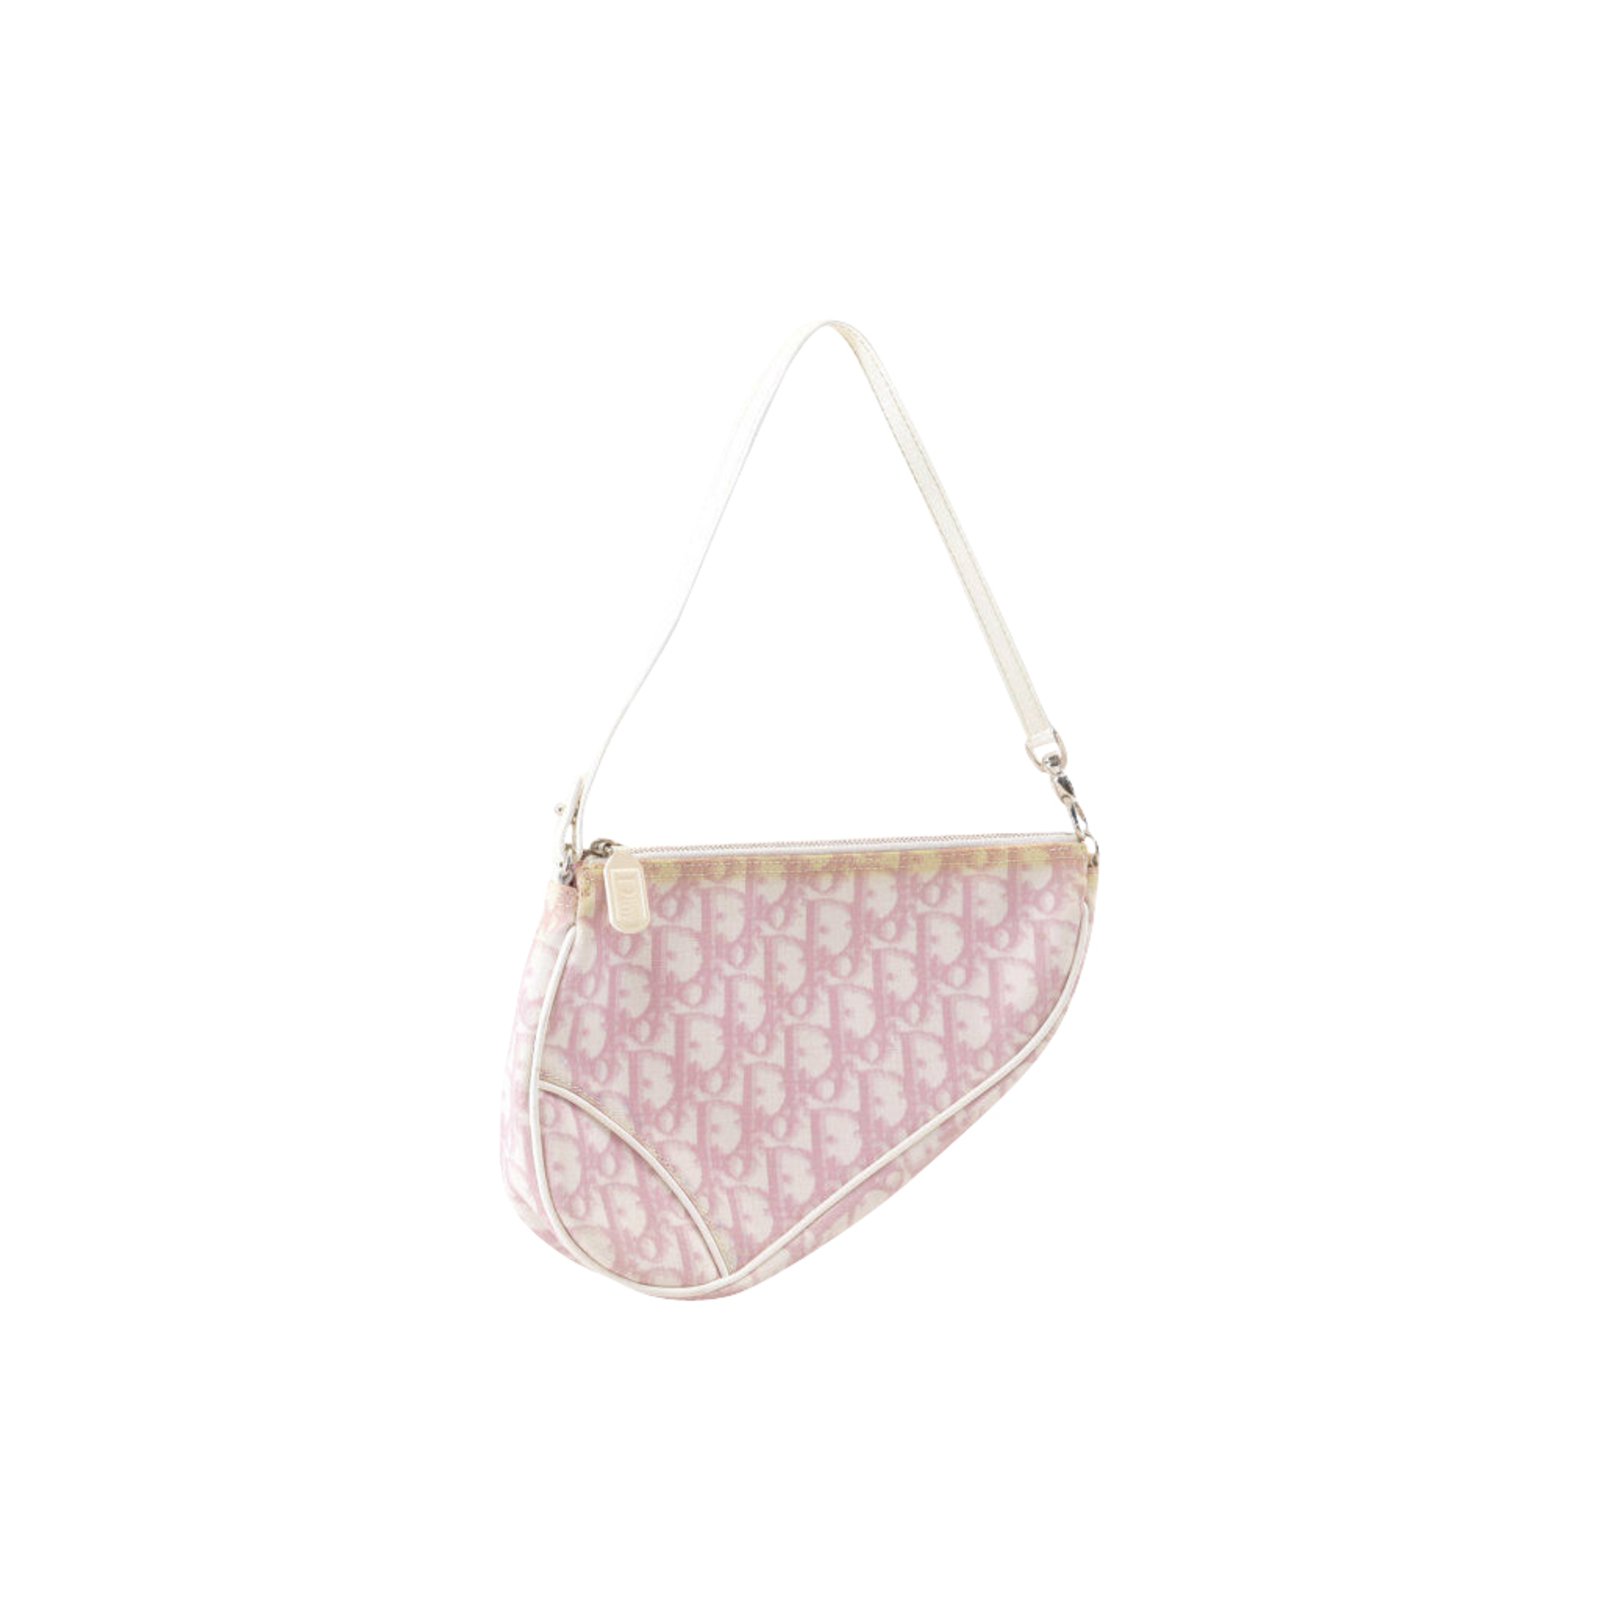 christian dior pink purse